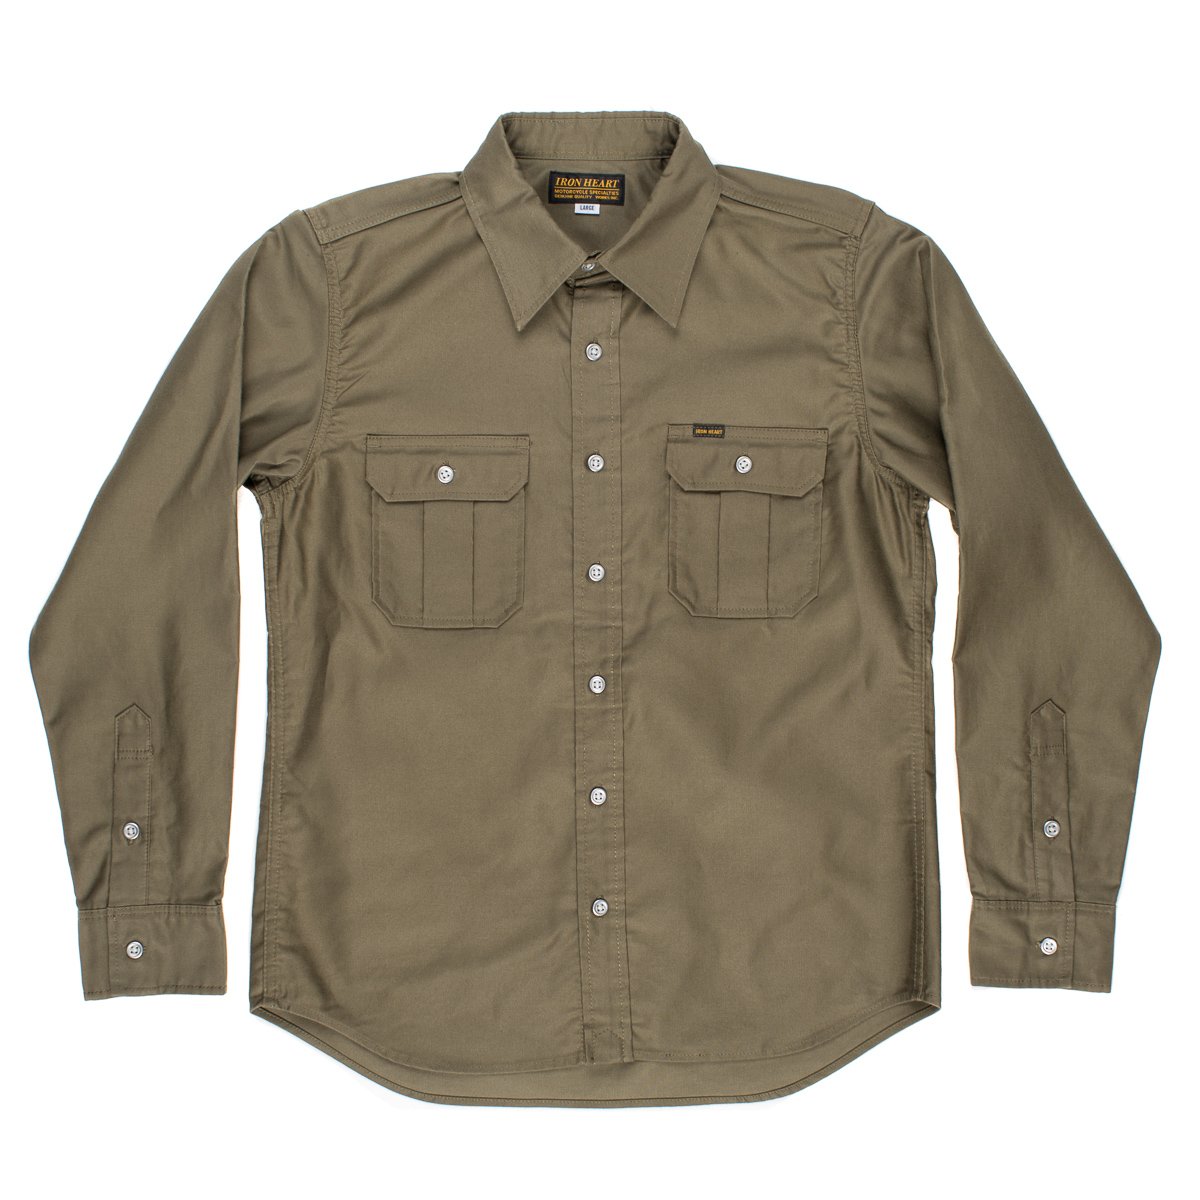 Black or Olive Japanese Super-Tough Cotton Military Work Shirt